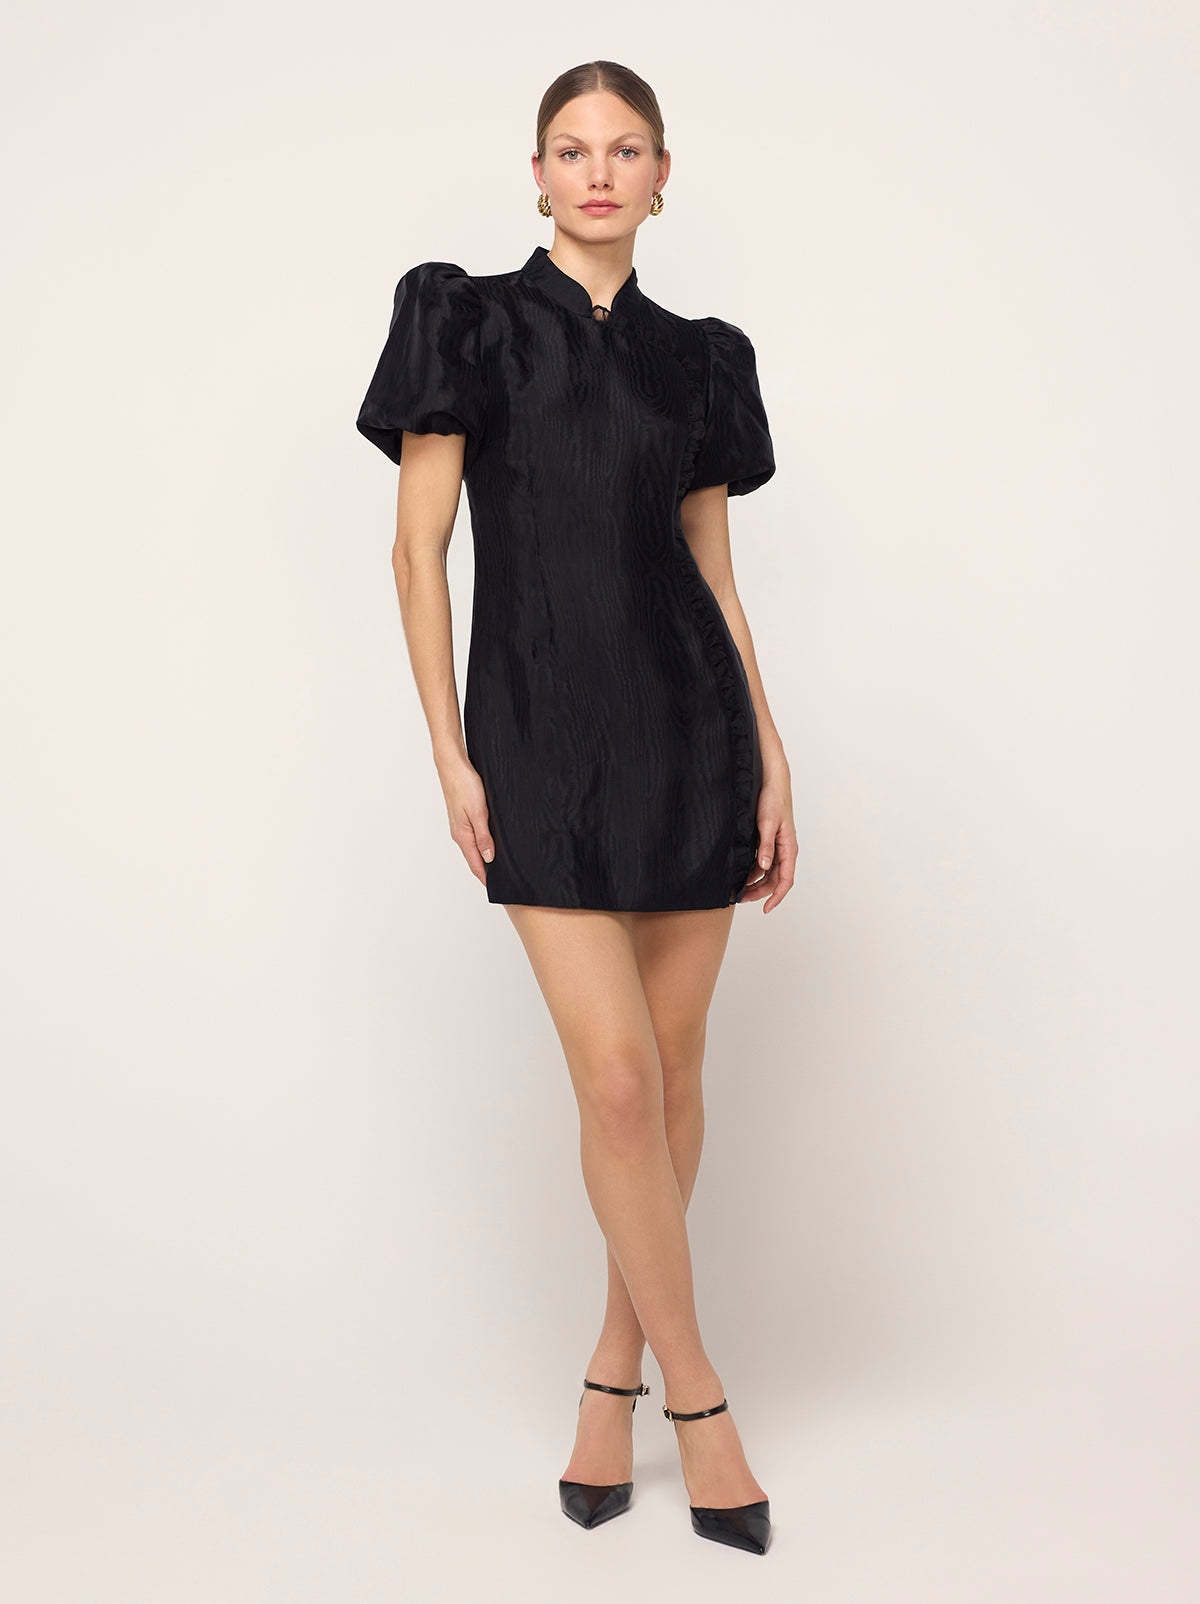 Philippa Black Moire Mini Dress By KITRI Studio